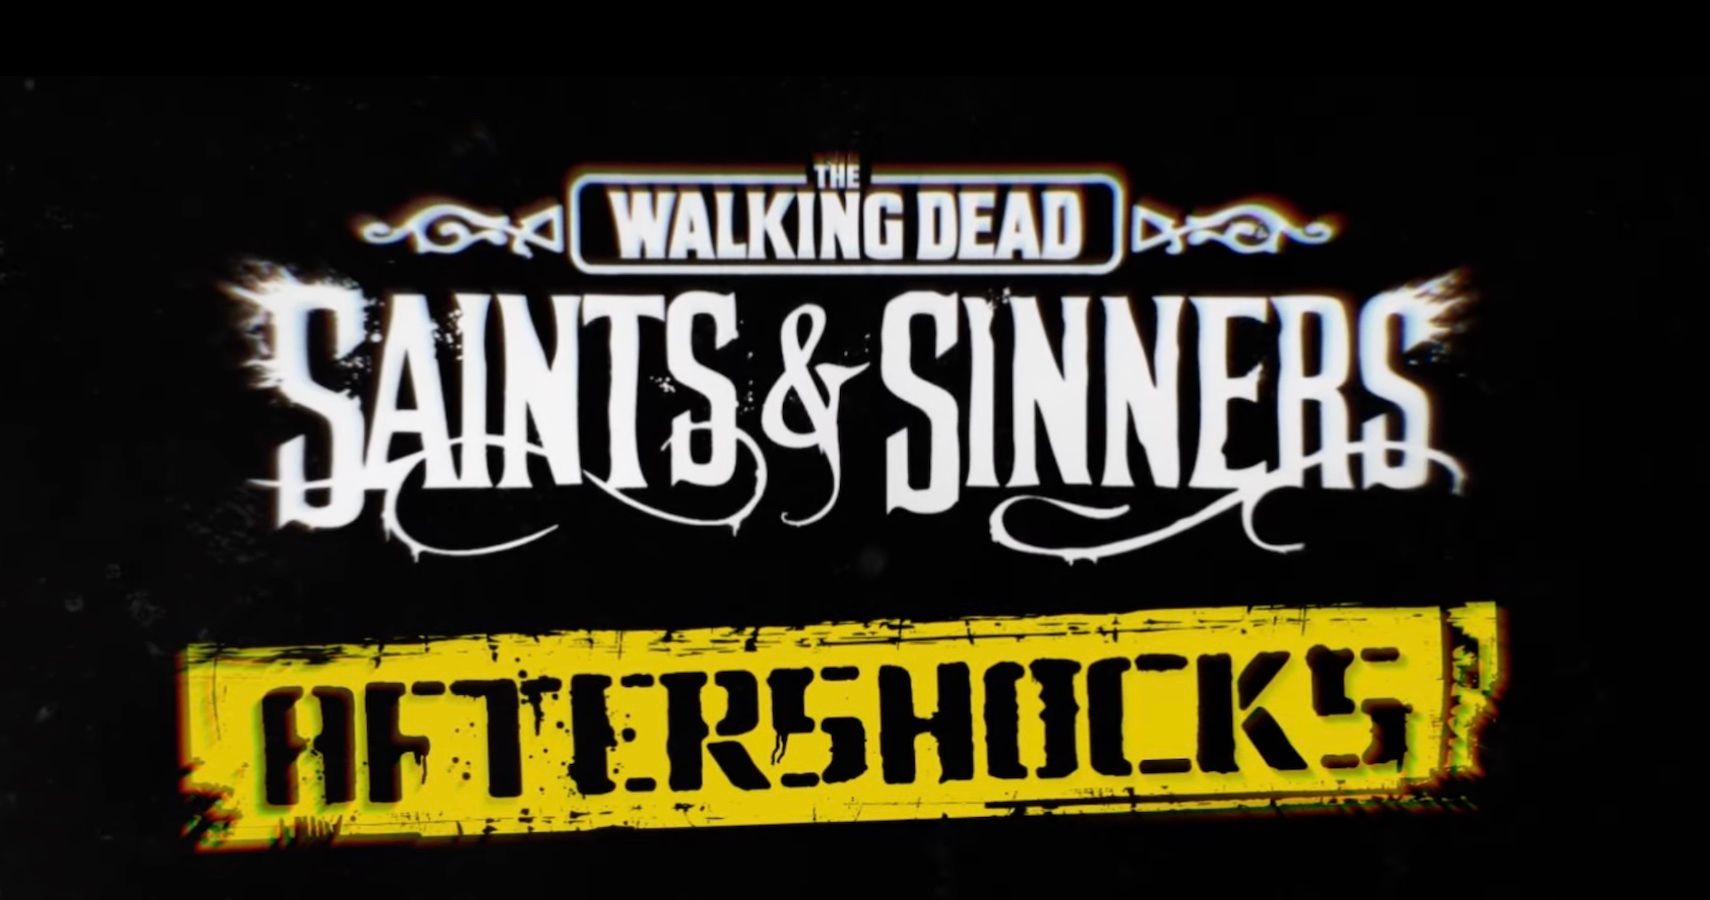 download the walking dead saints & sinners for free